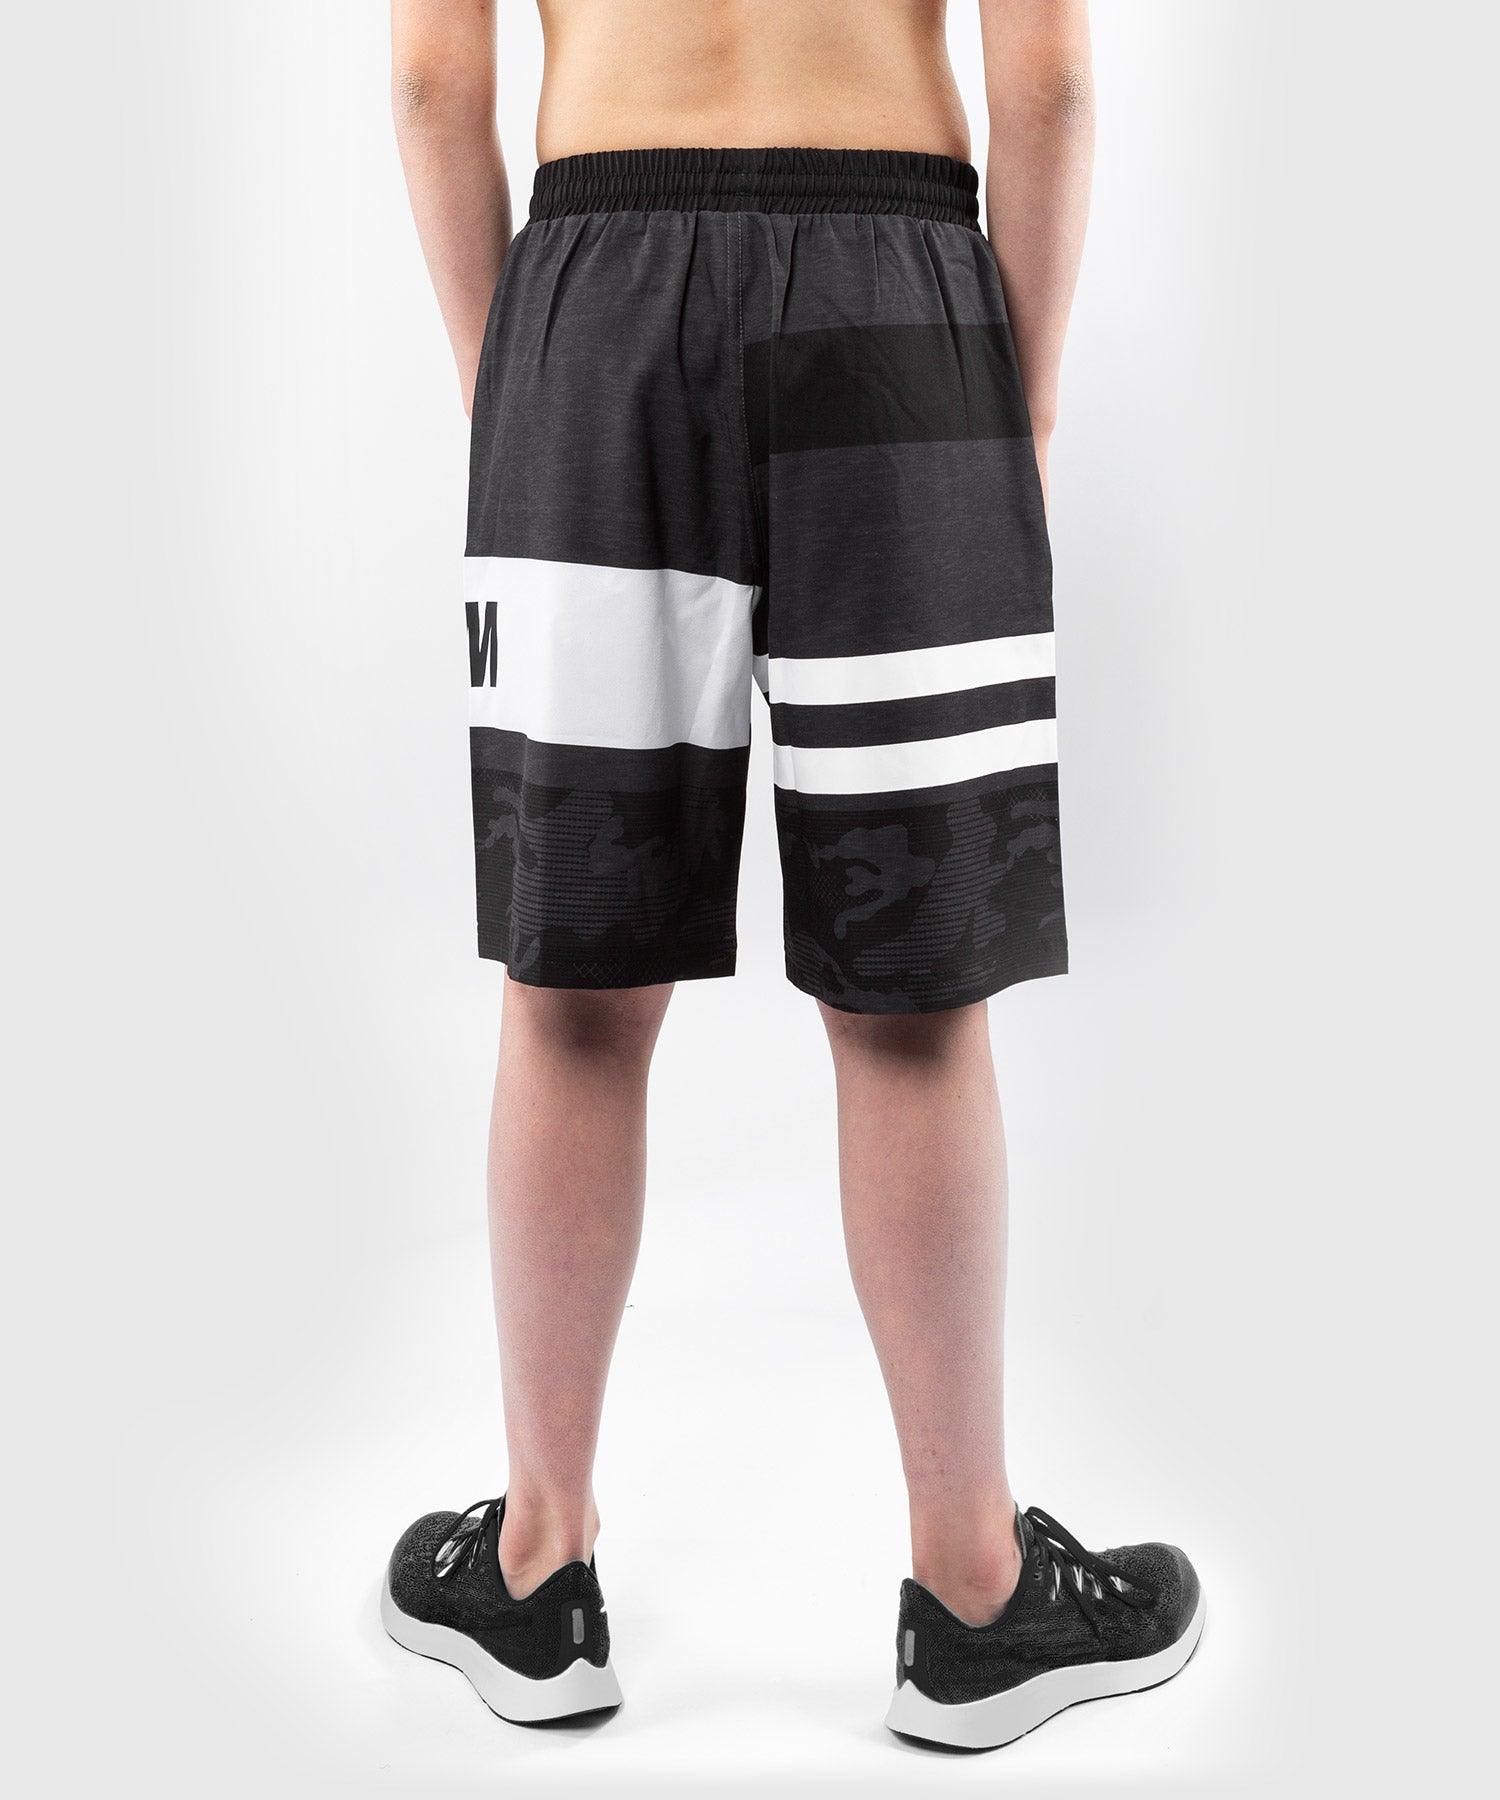 Venum Bandit training shorts - for kids - Black/Grey Picture 2